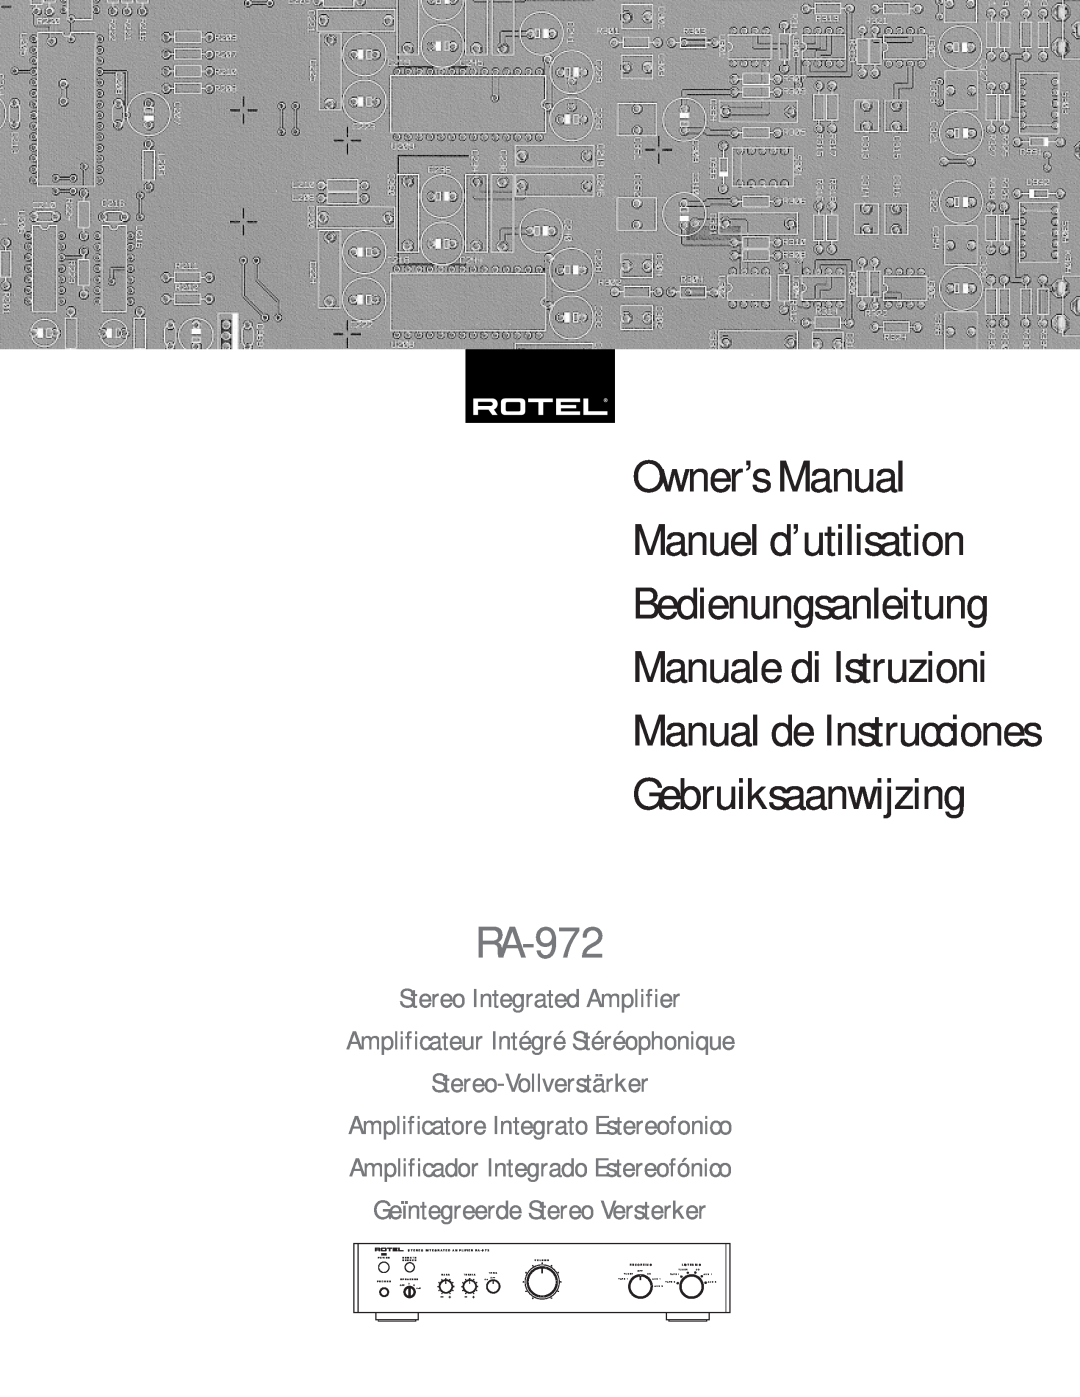 Rotel RA-972 owner manual Manual de Instrucciones, Manuel d’utilisation, Gebruiksaanwijzing, Manuale di Istruzioni 